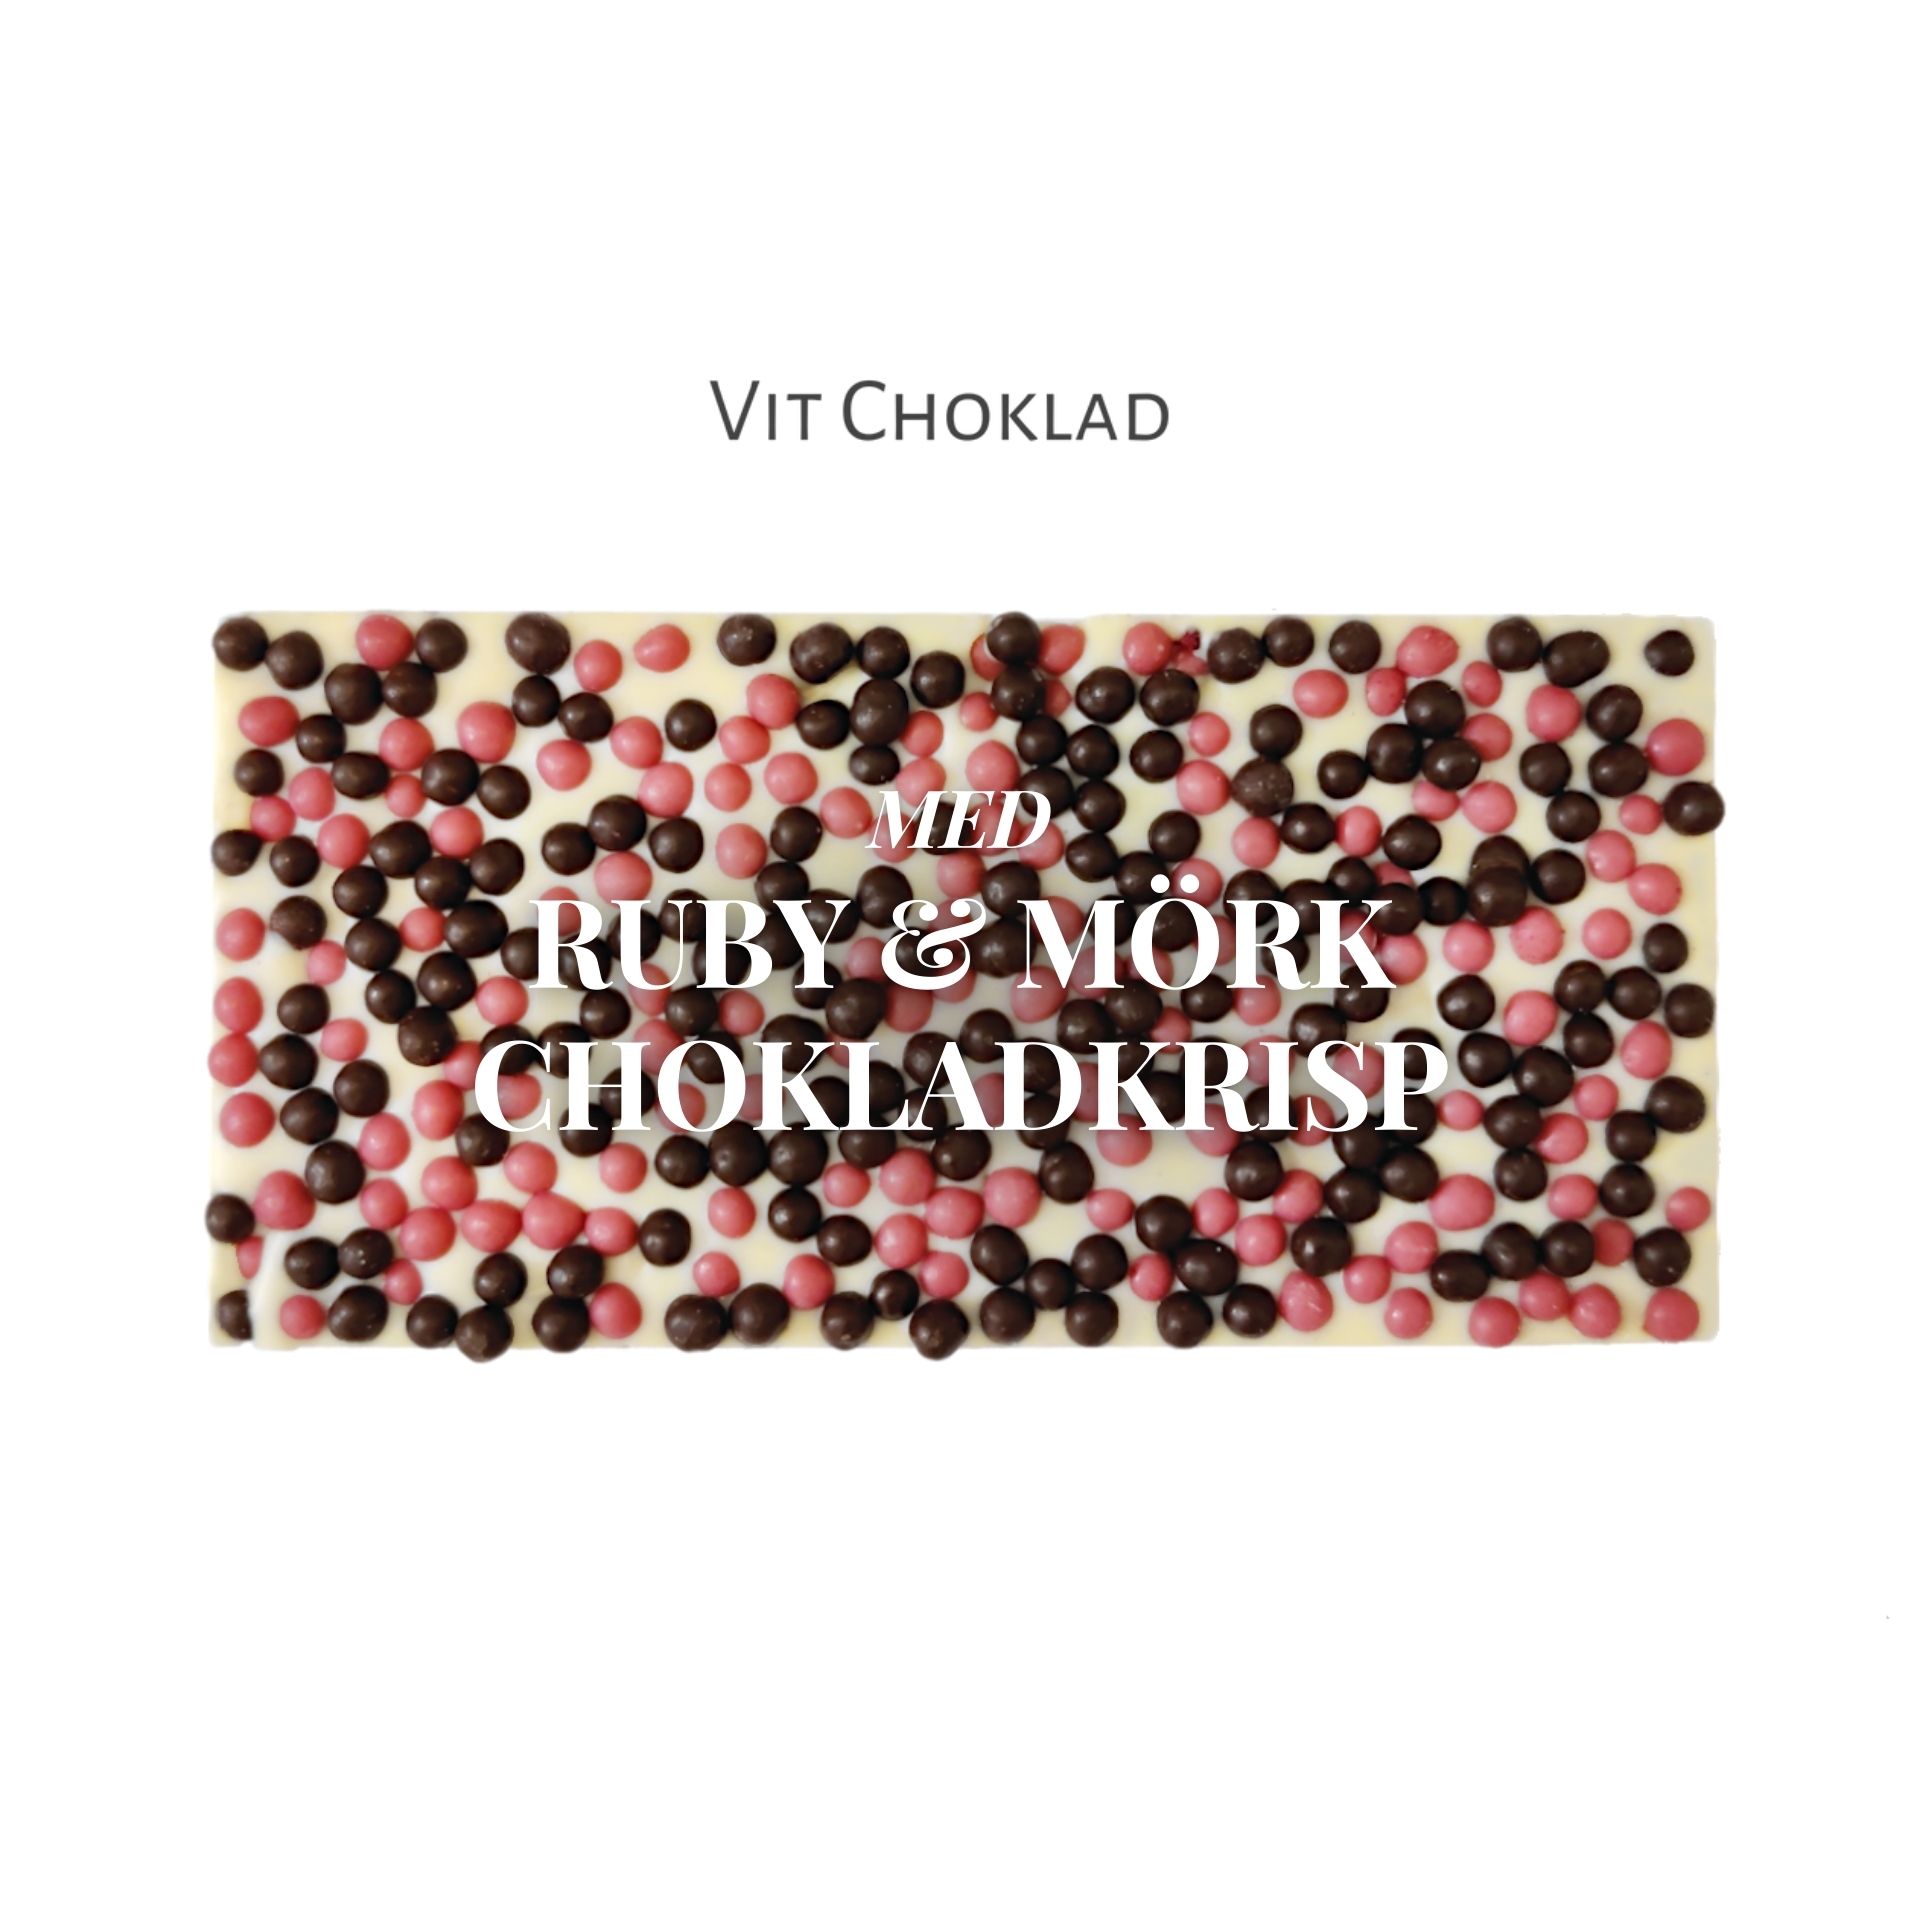 Pralinhuset - Vit Choklad - Ruby & Mörk Chokladkrisp